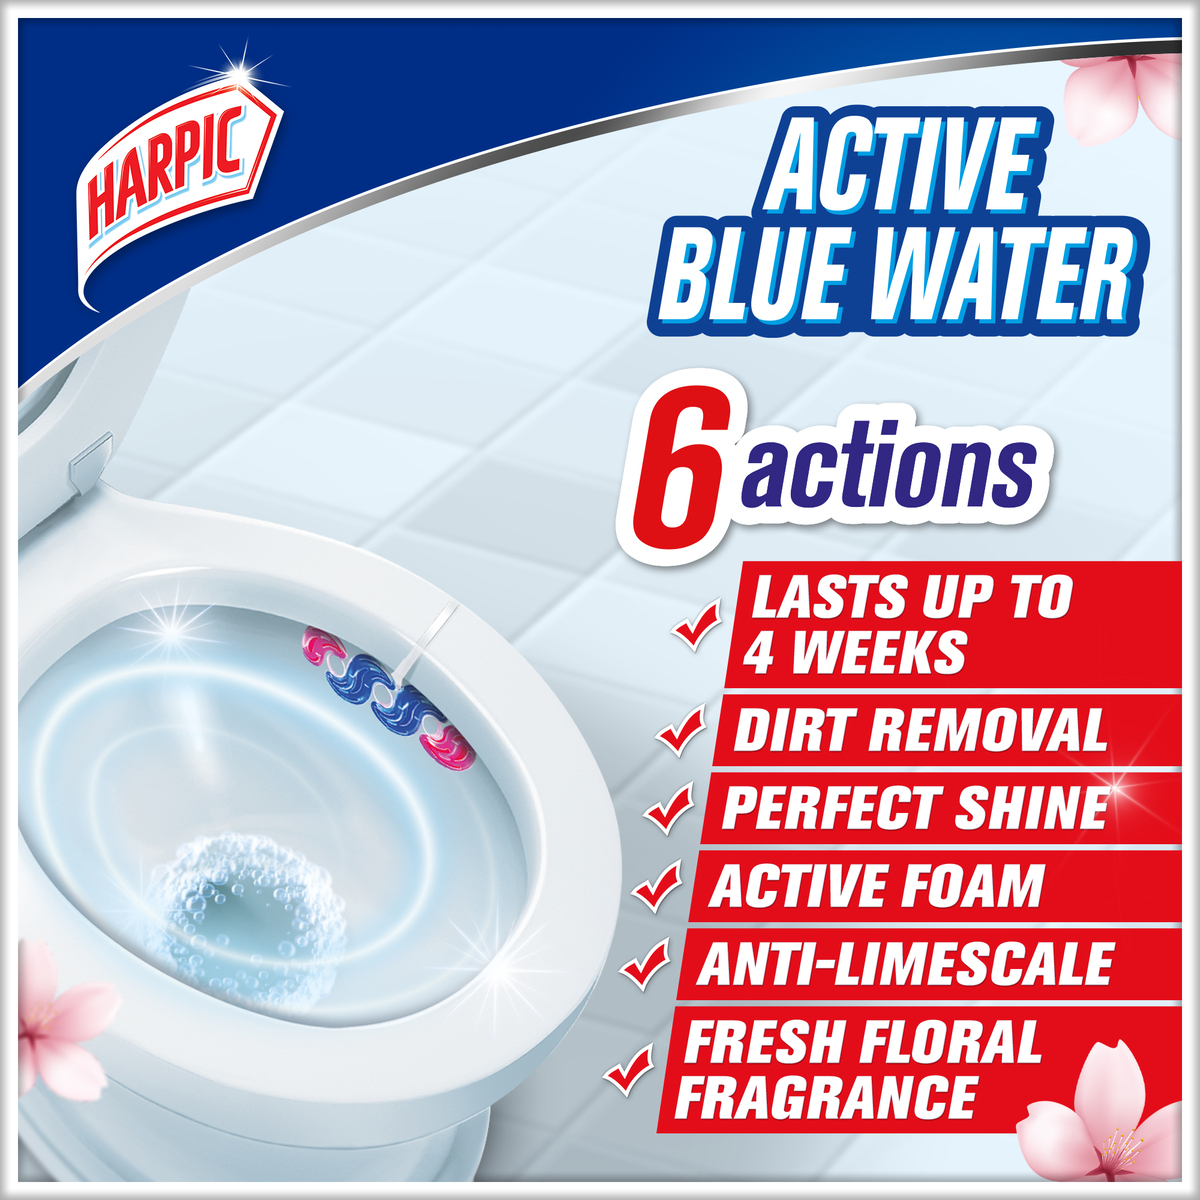 Harpic Active Blue Water Toilet Cleaner Rim Block Floral Burst 35 g